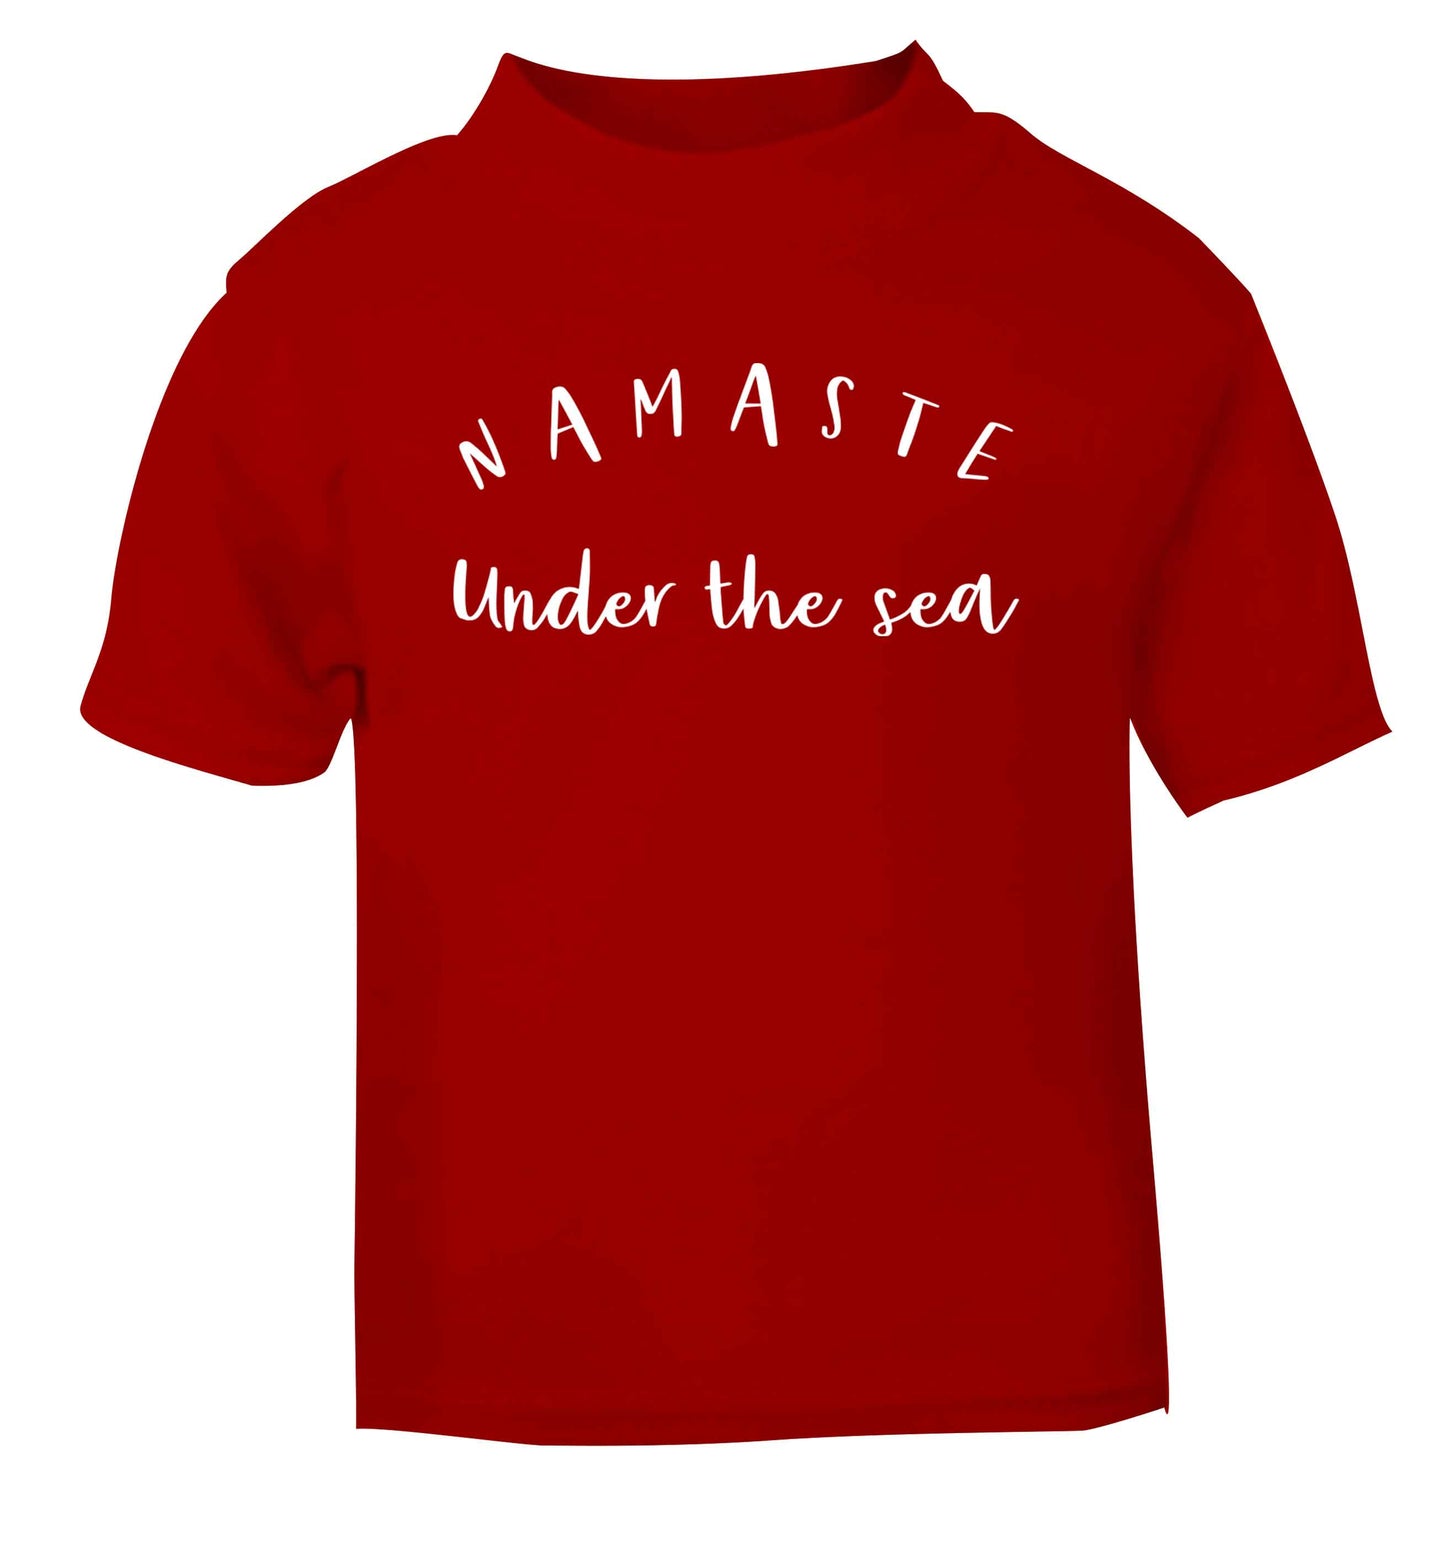 Namaste under the water red Baby Toddler Tshirt 2 Years